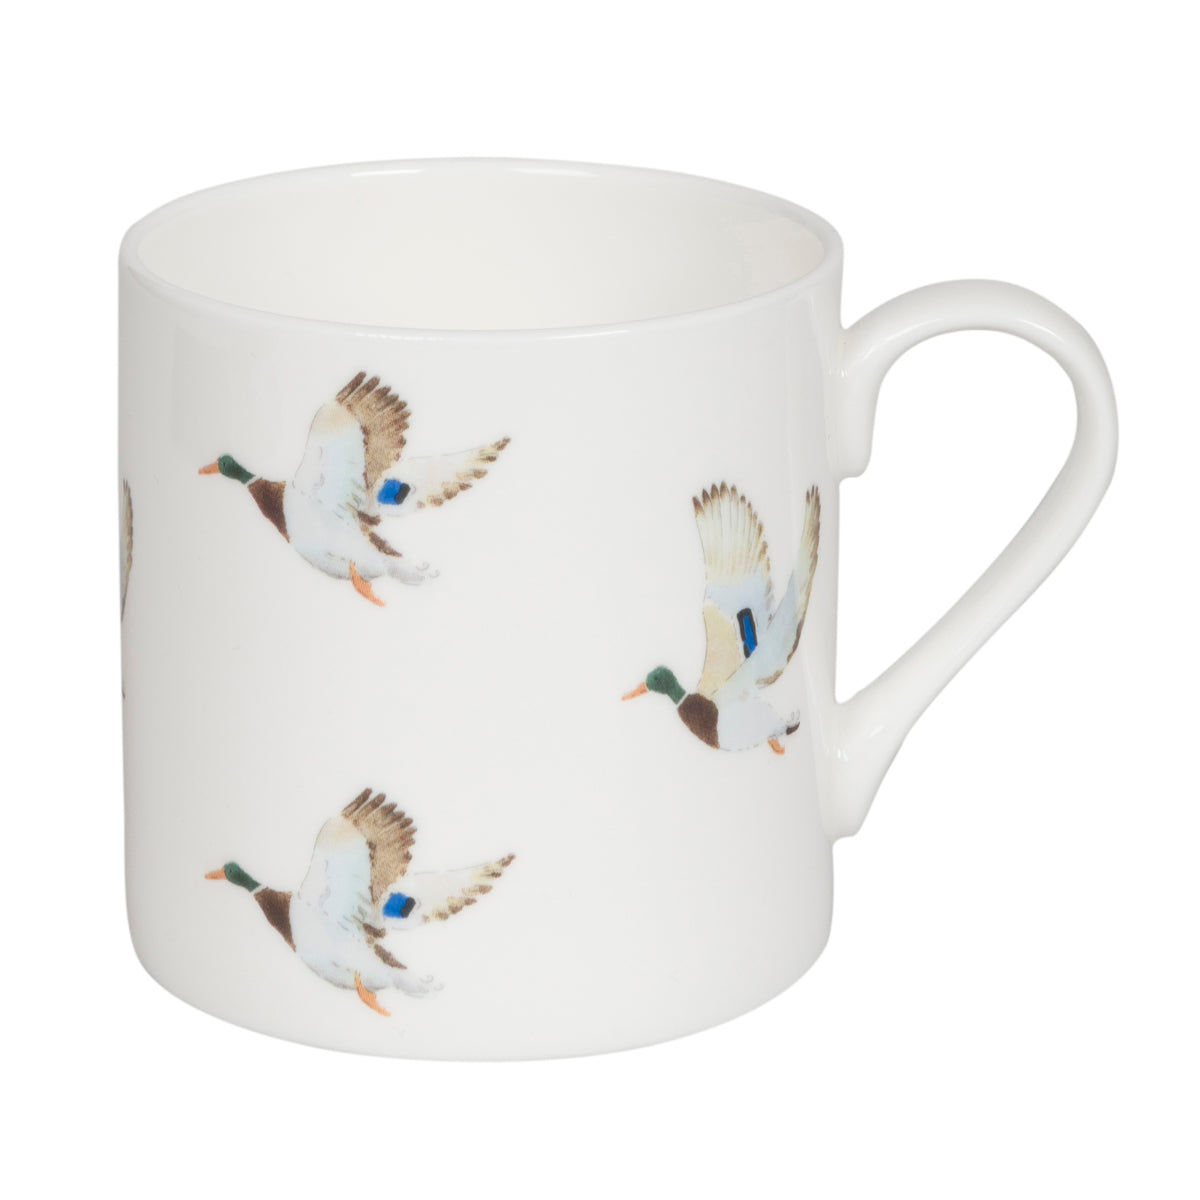 Ducks Mug by Sophie Allport